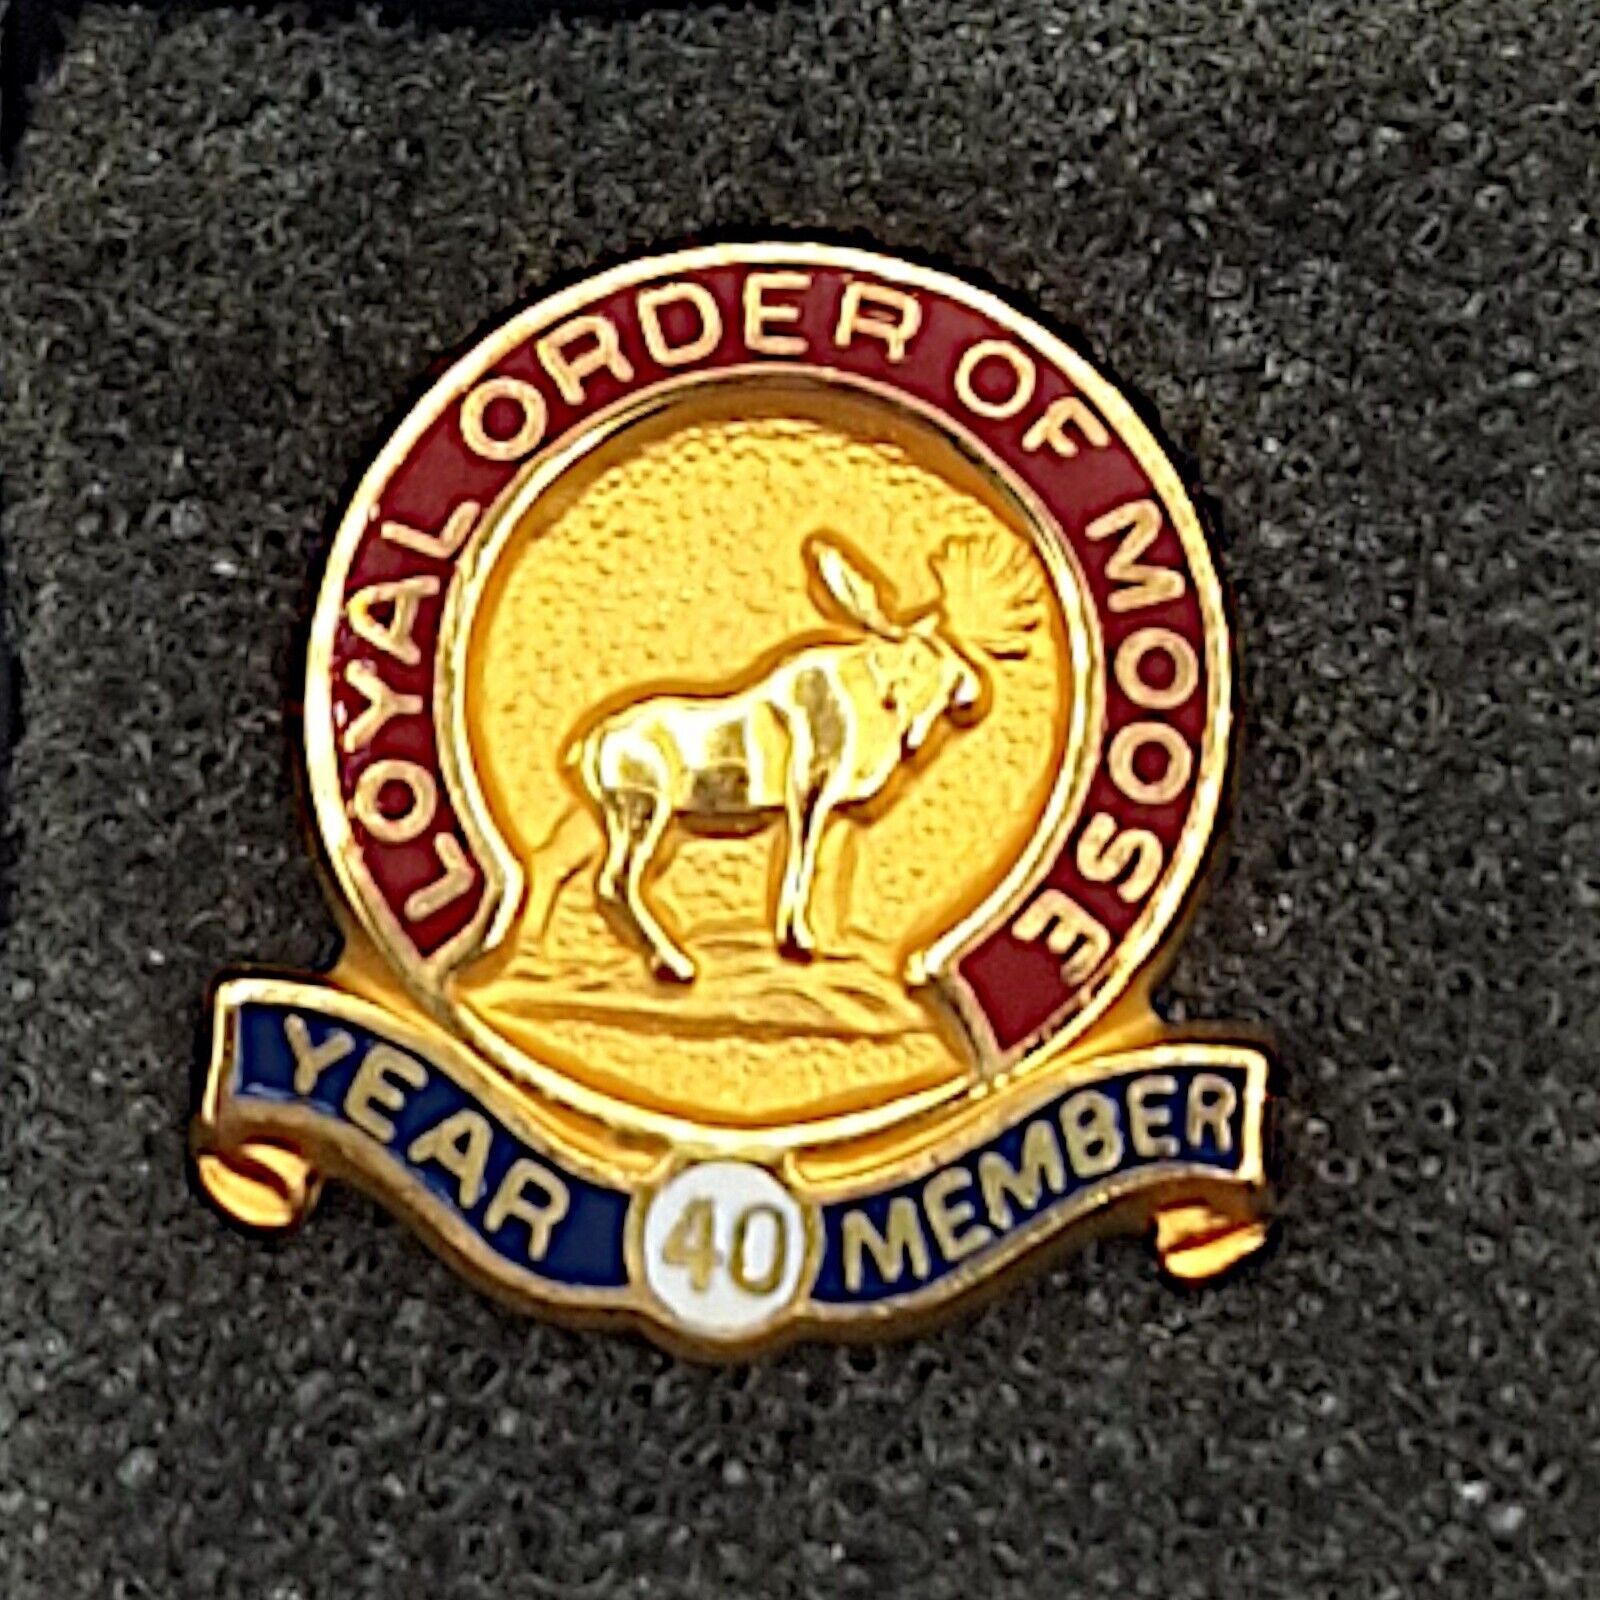 Loyal Order Of Moose Year 40 Member Pin Gold & Enamel Limited Edition